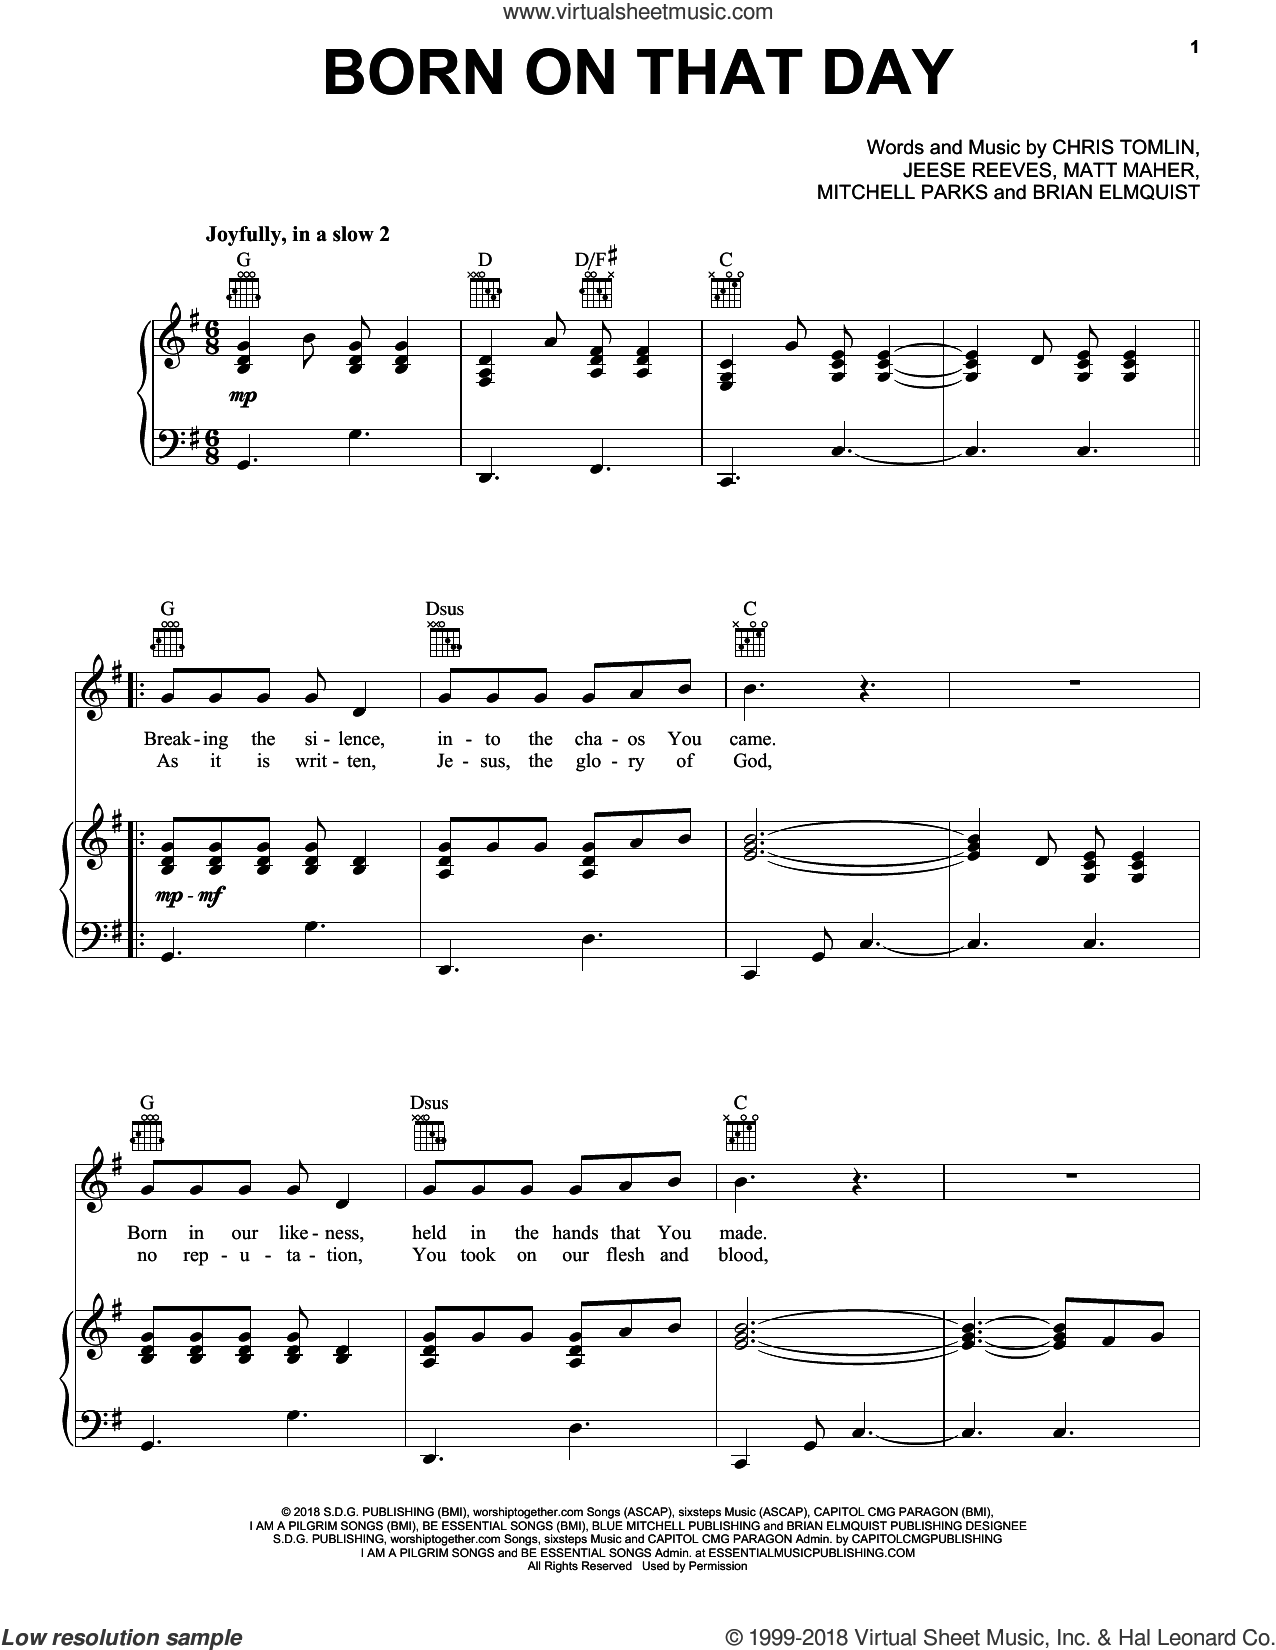 Free Matt Maher sheet music  Download PDF or print on